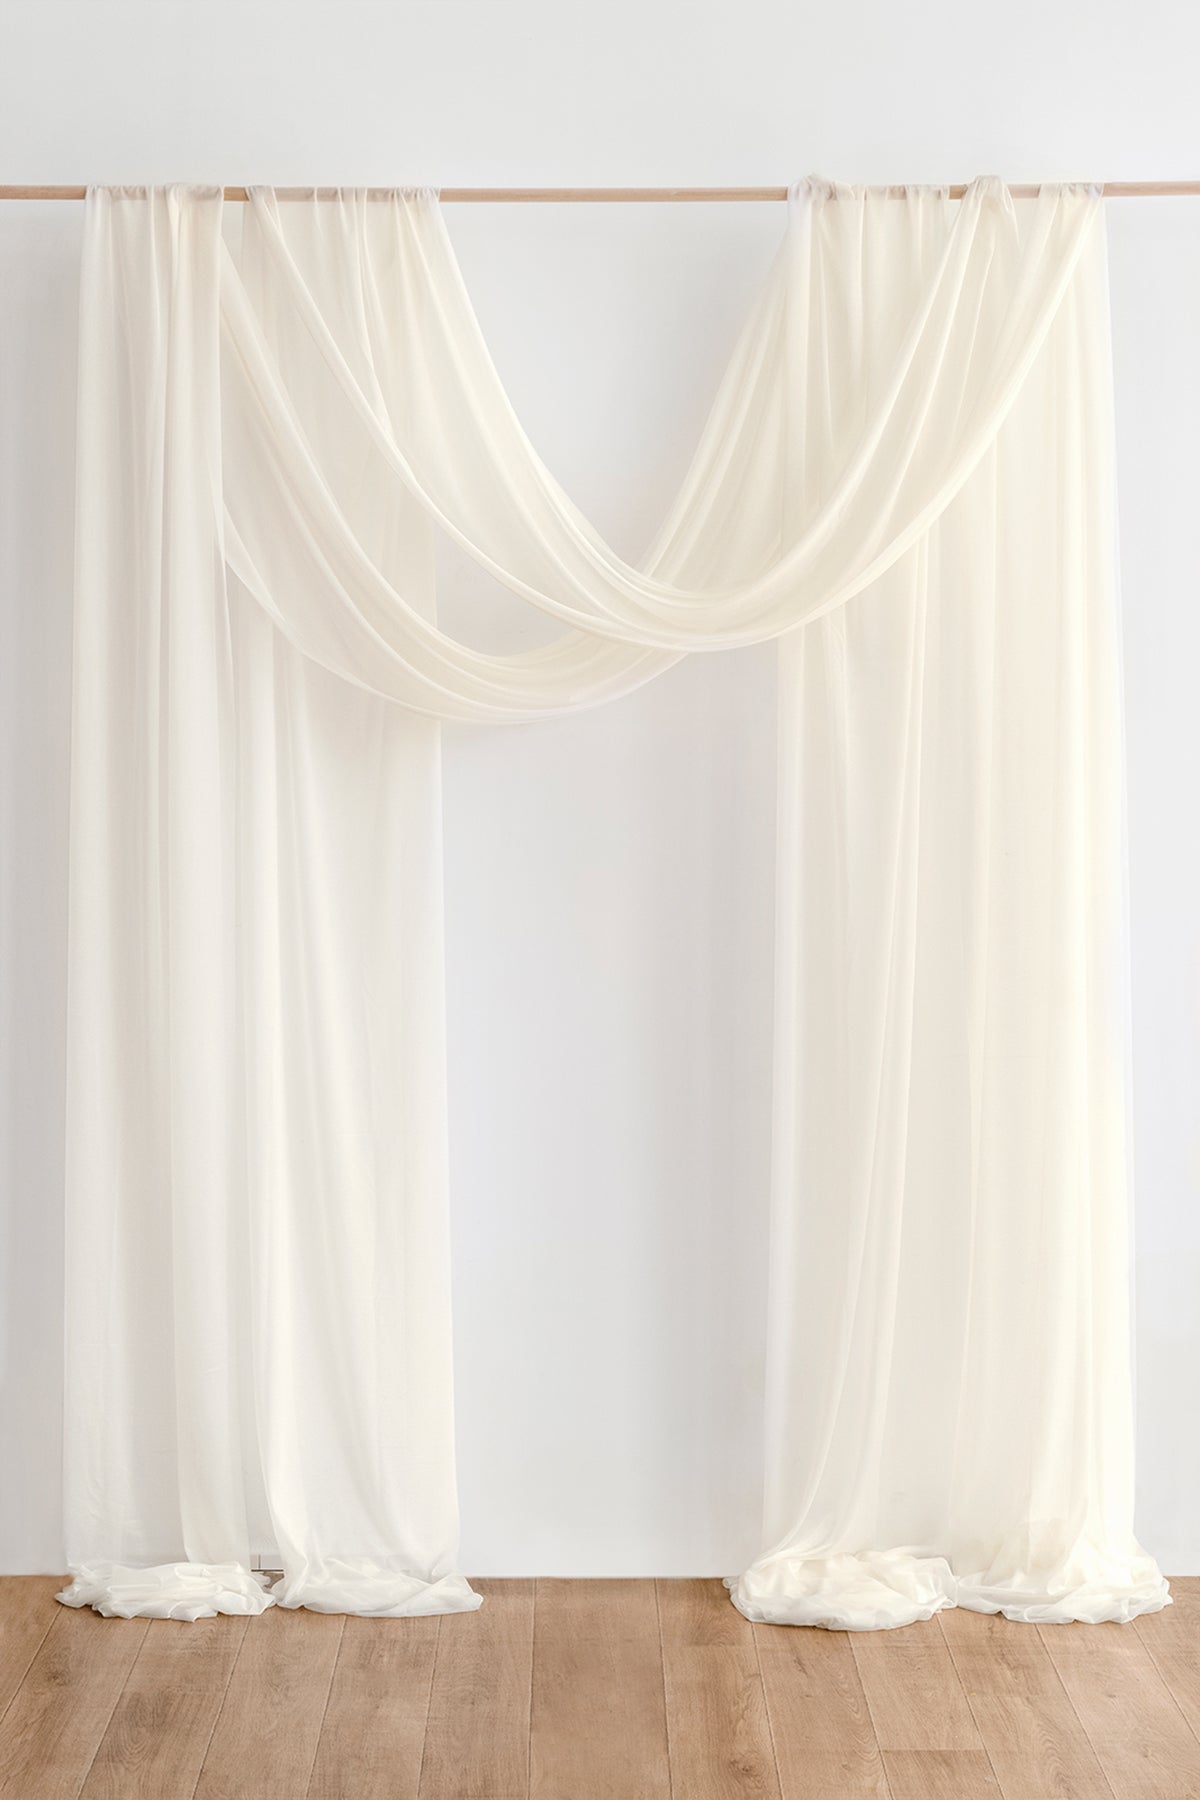 Wedding Arch Drapes in White & Beige